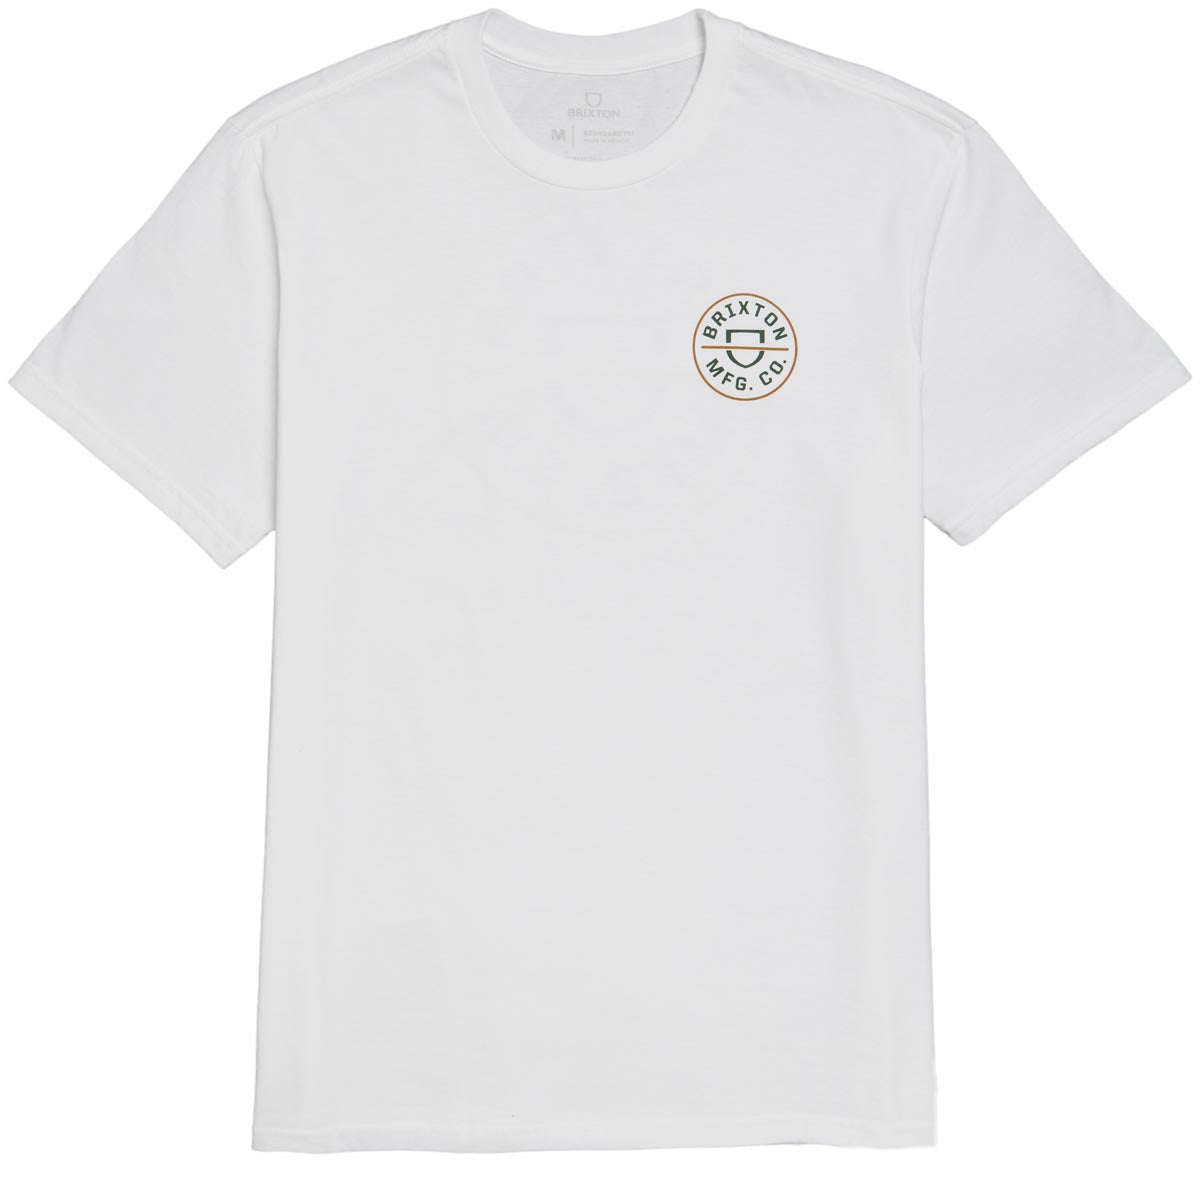 Brixton Crest II T-Shirt - White/Pine Needle/Golden Brown image 1